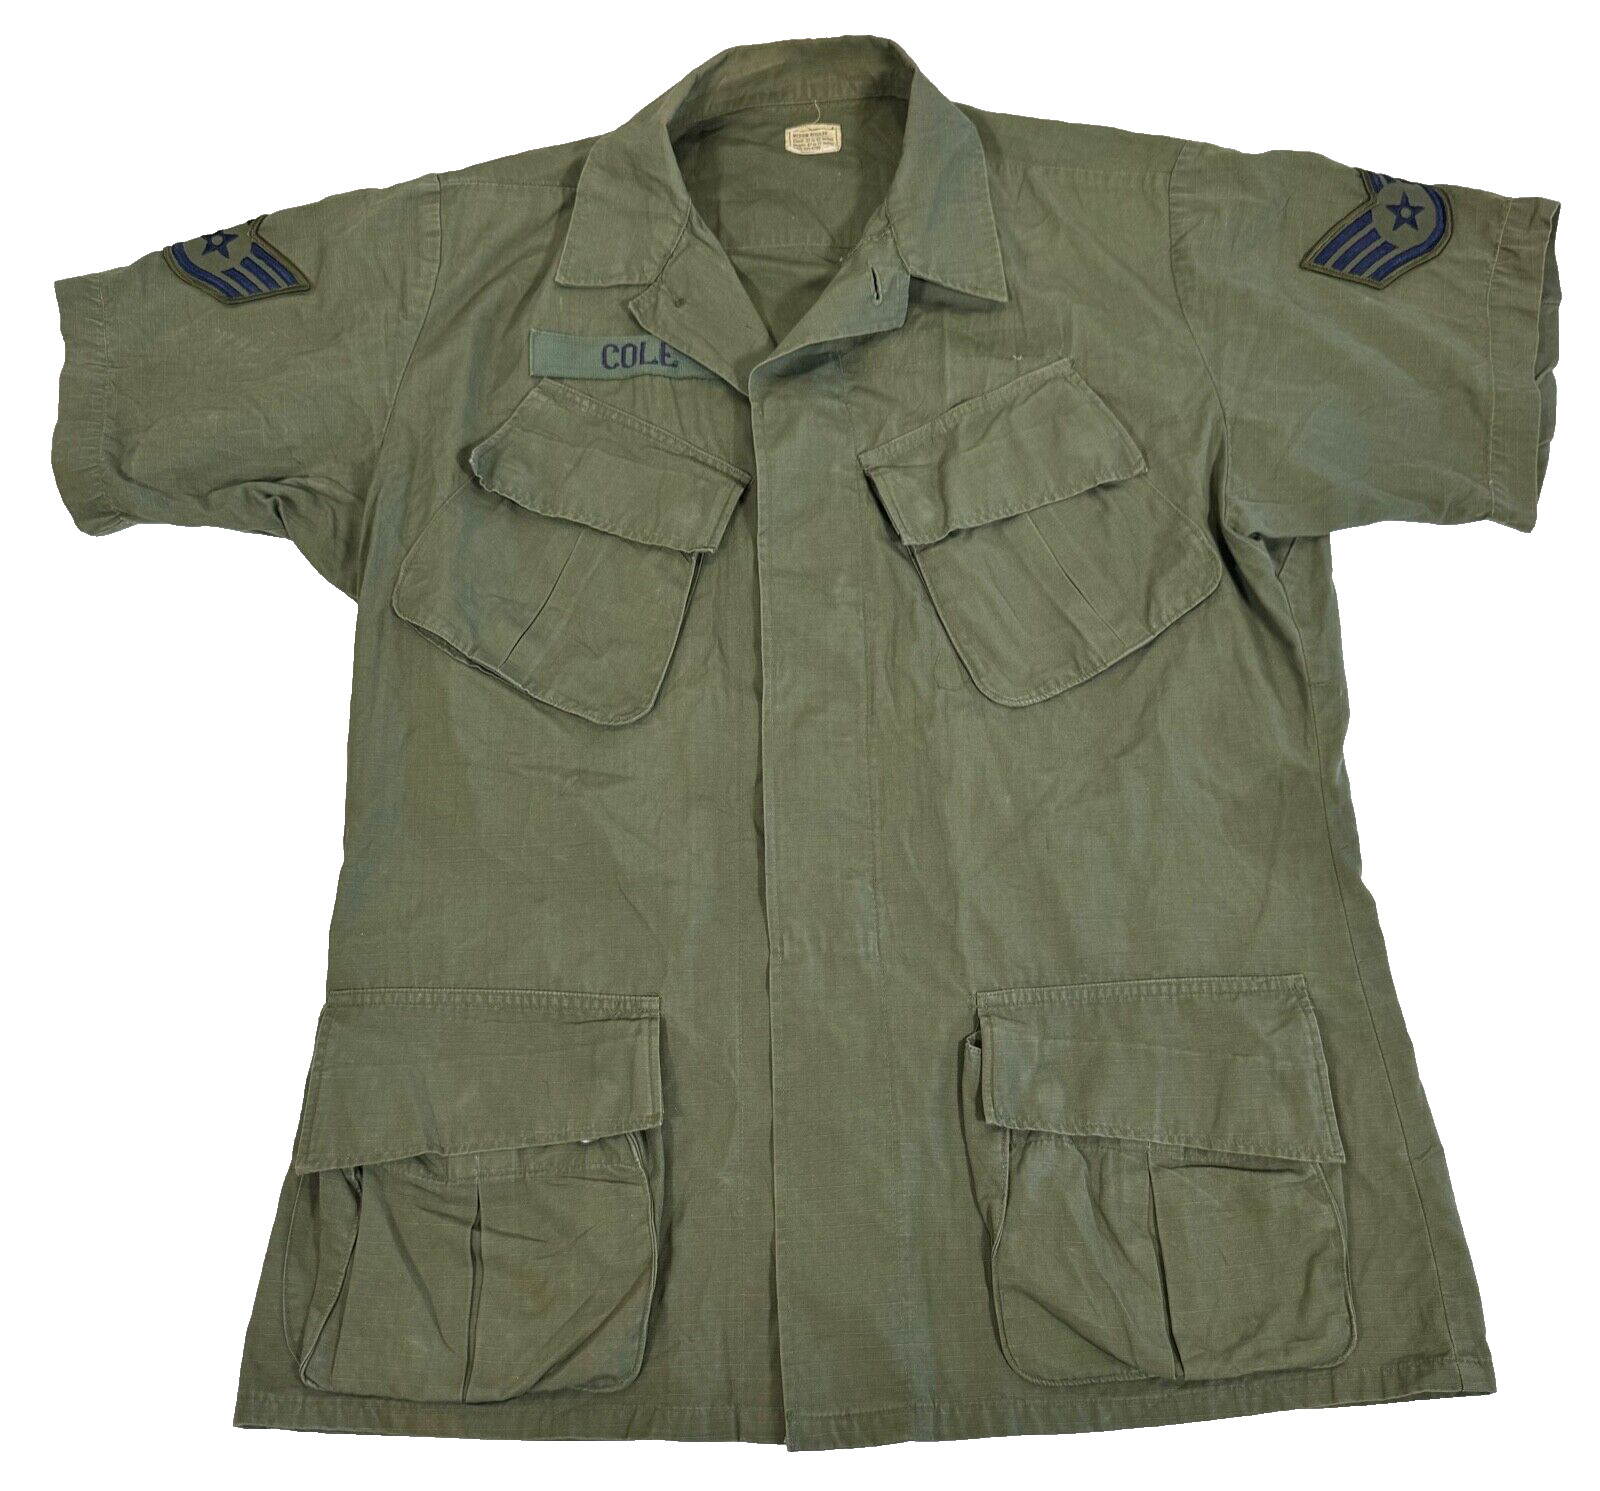 Vietnam USAF OD Jungle Tropical Combat Jacket Coat Short Sleeve Medium Regular